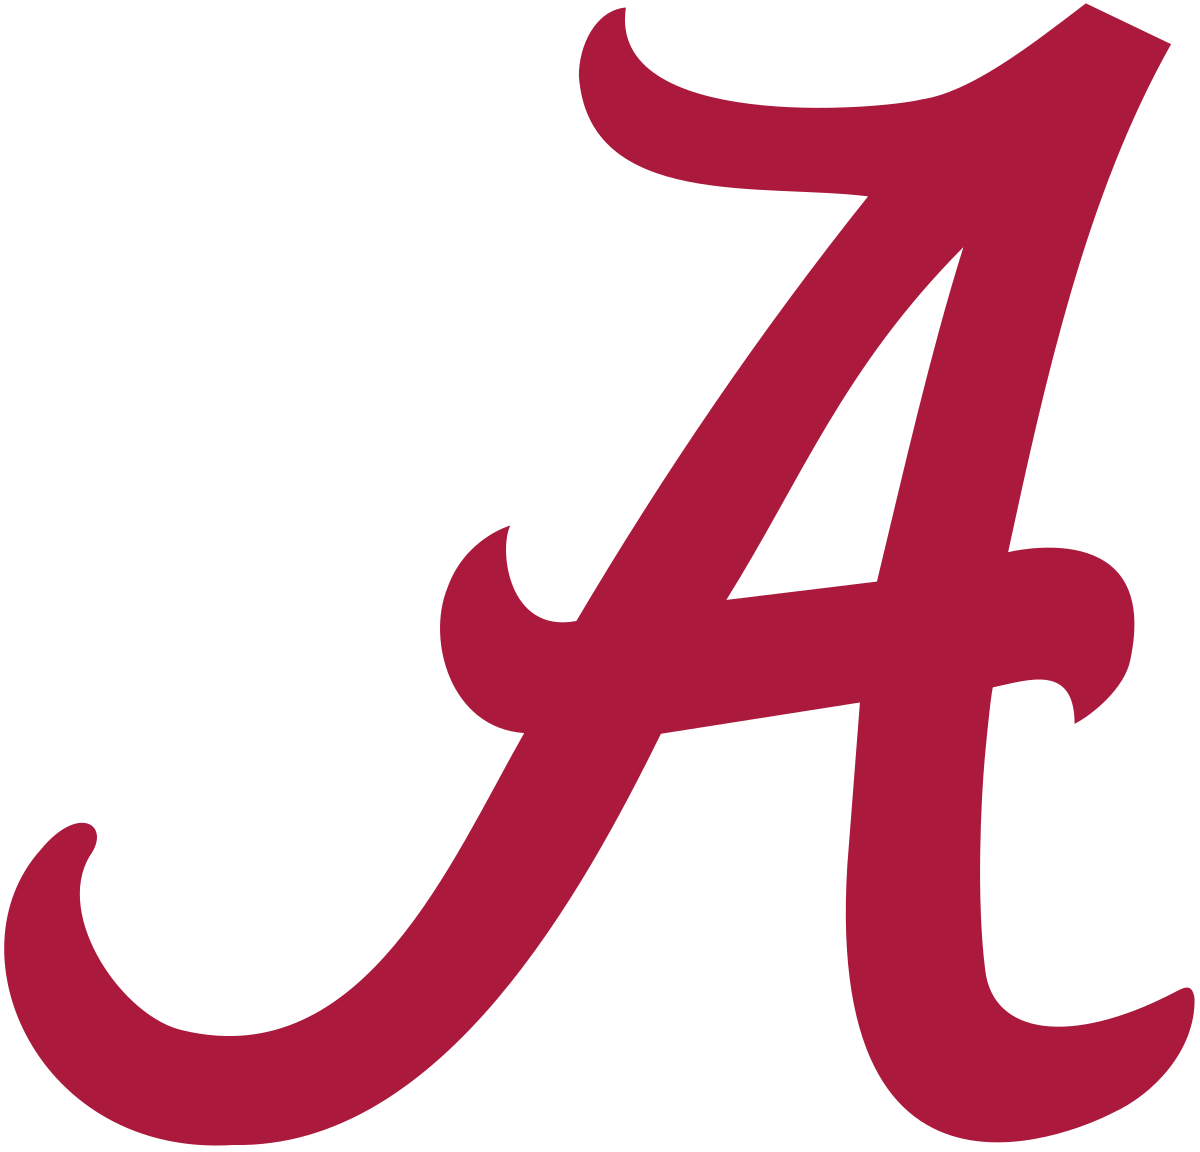 U of L Football Logo - Alabama Crimson Tide football